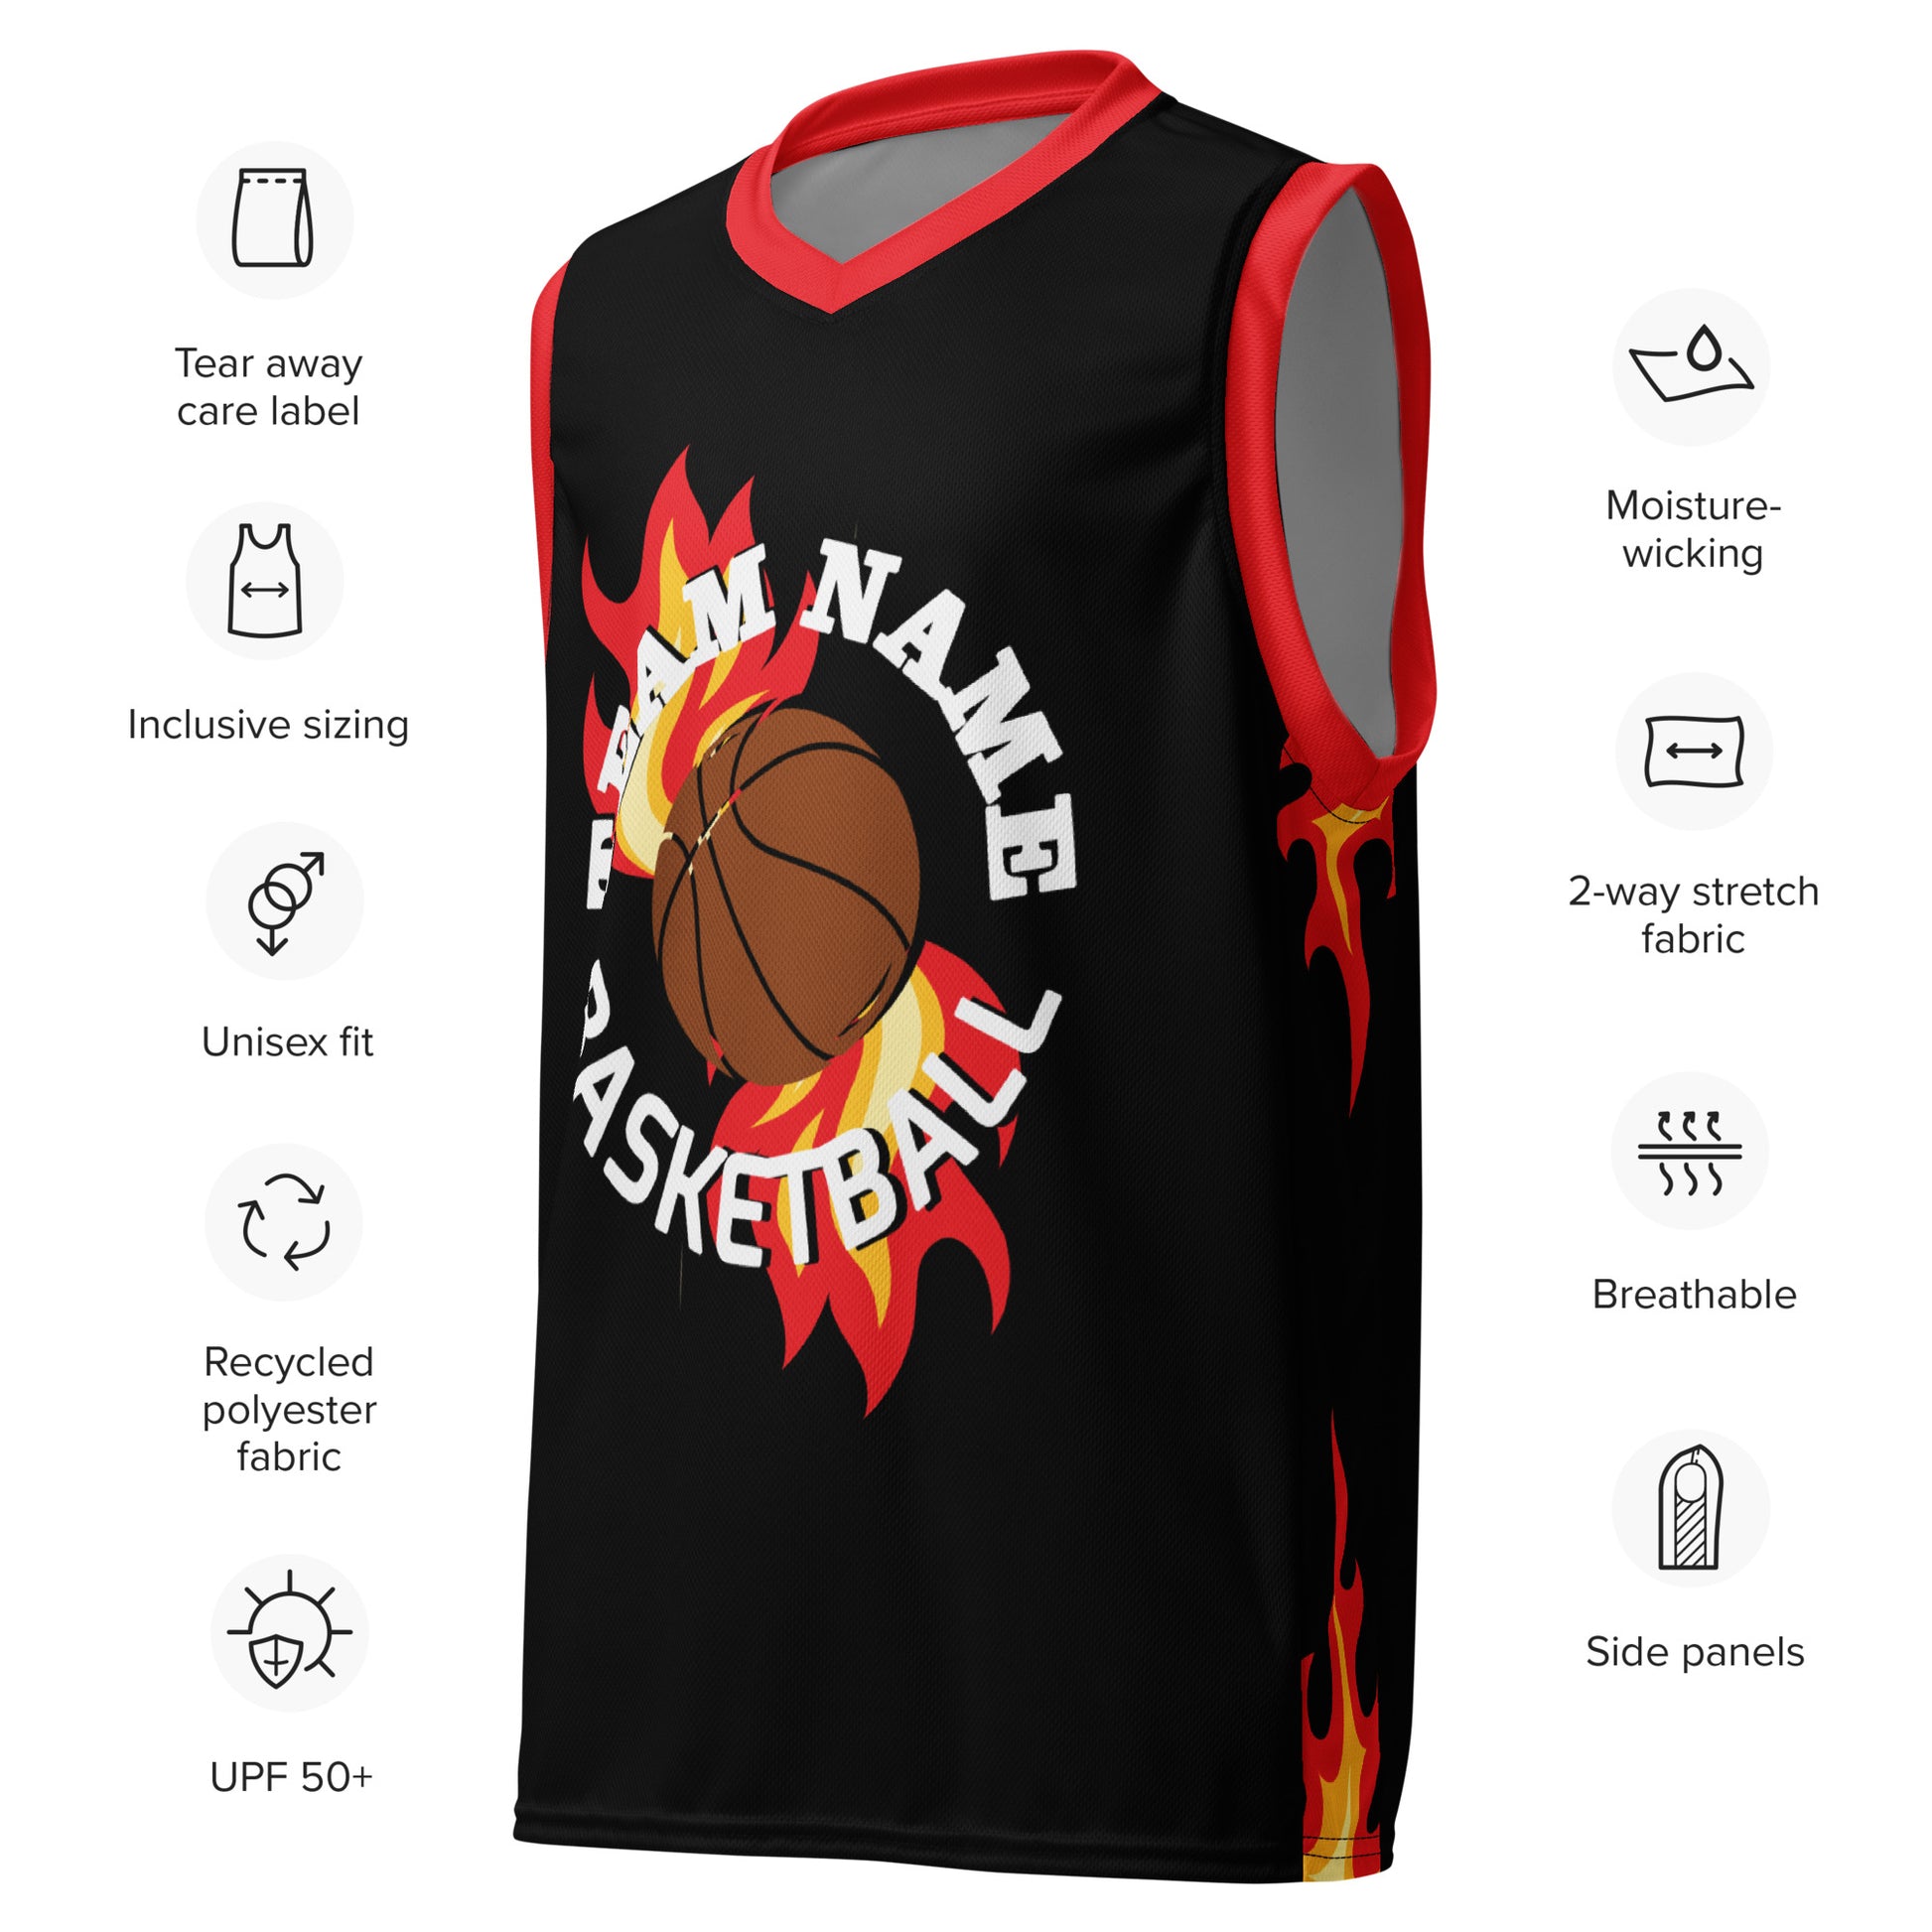 Polyester Custom Basketball Jerseys Cheap